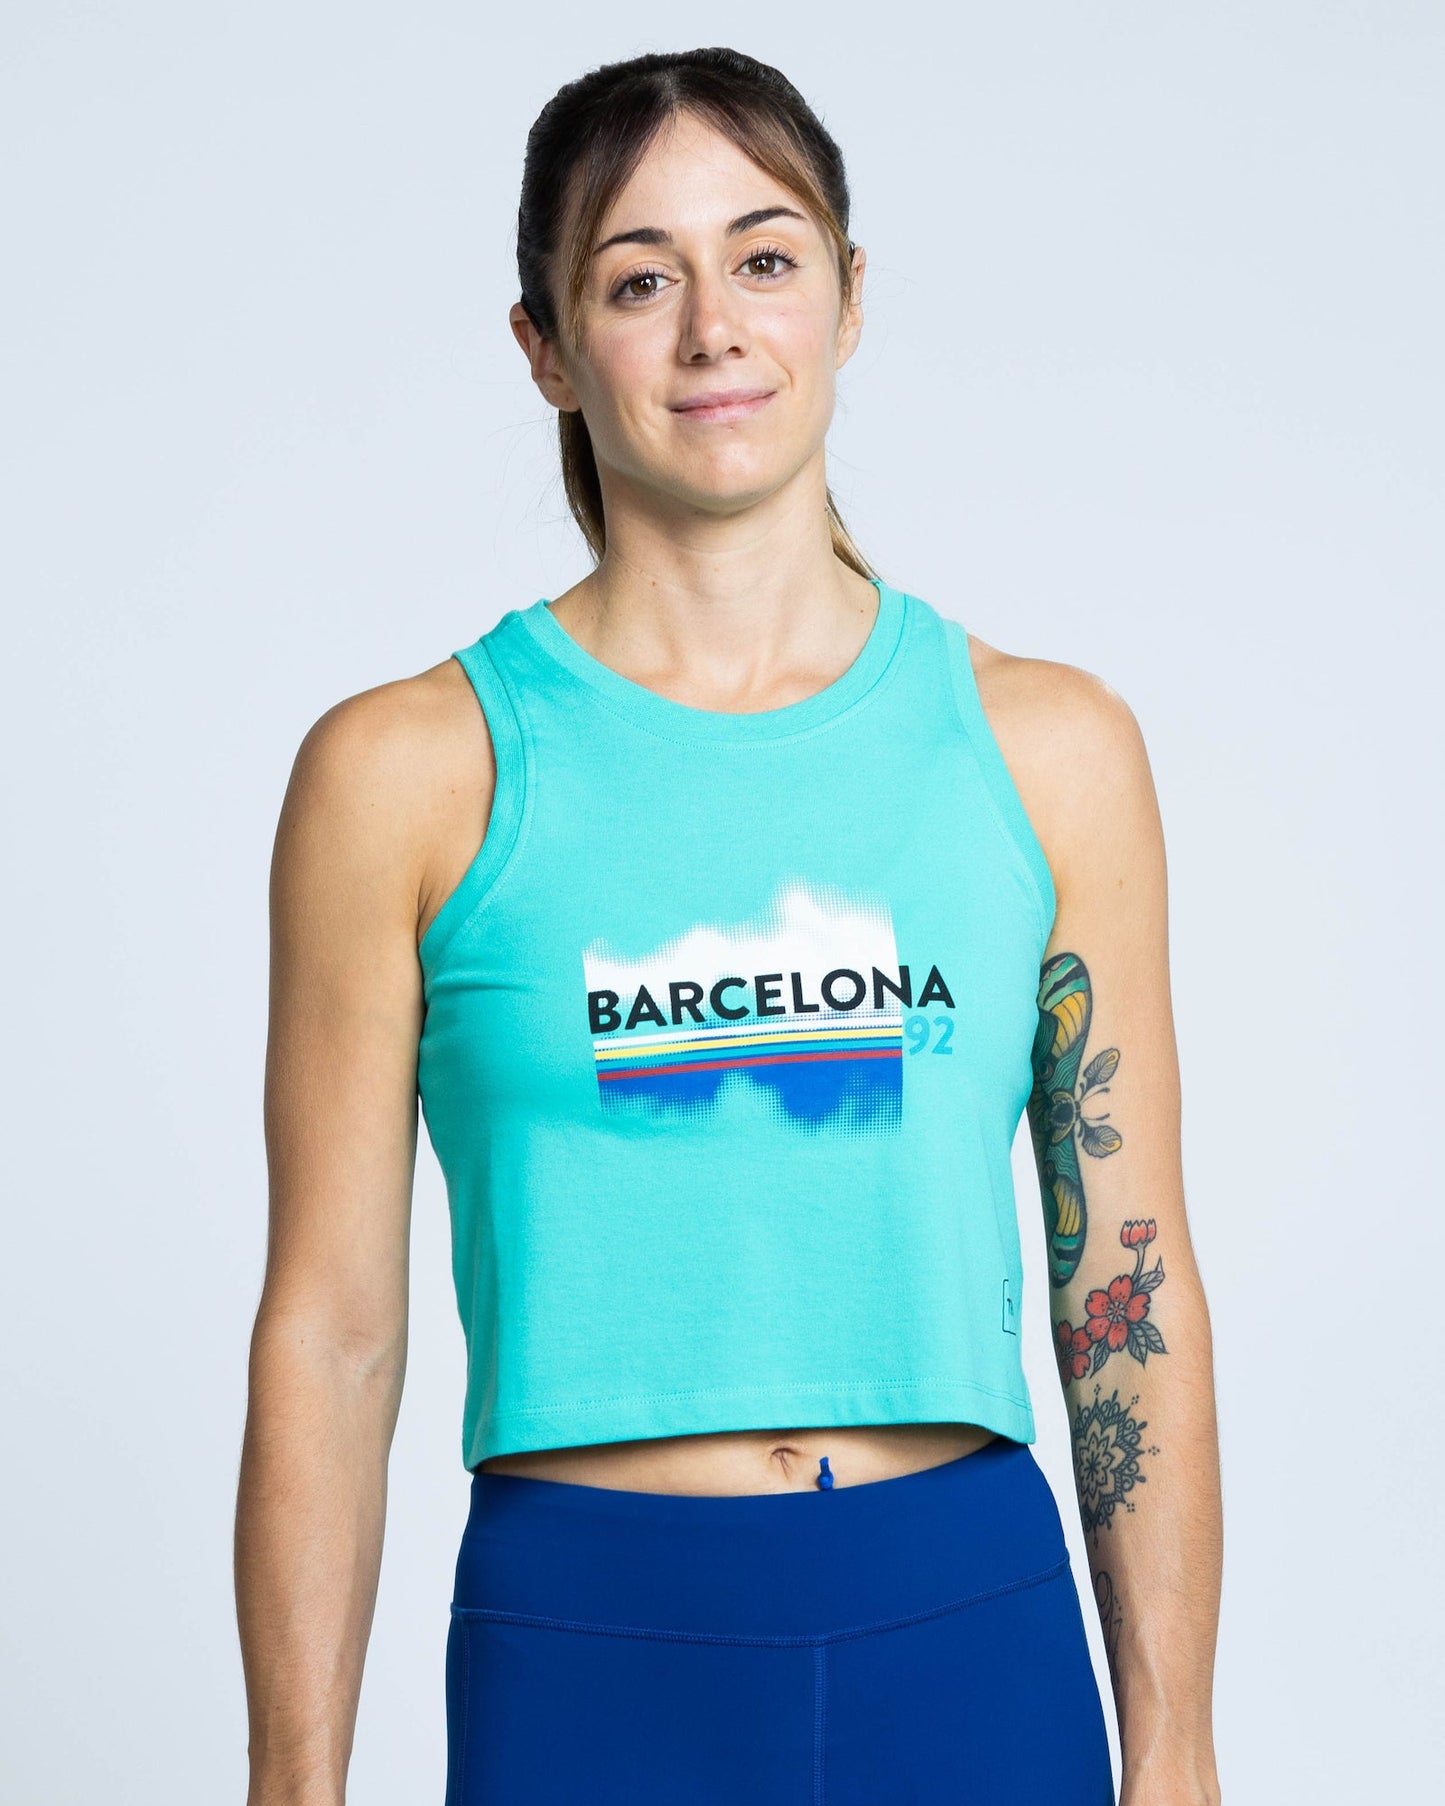 Women's Amplified Barcelona 92 Top